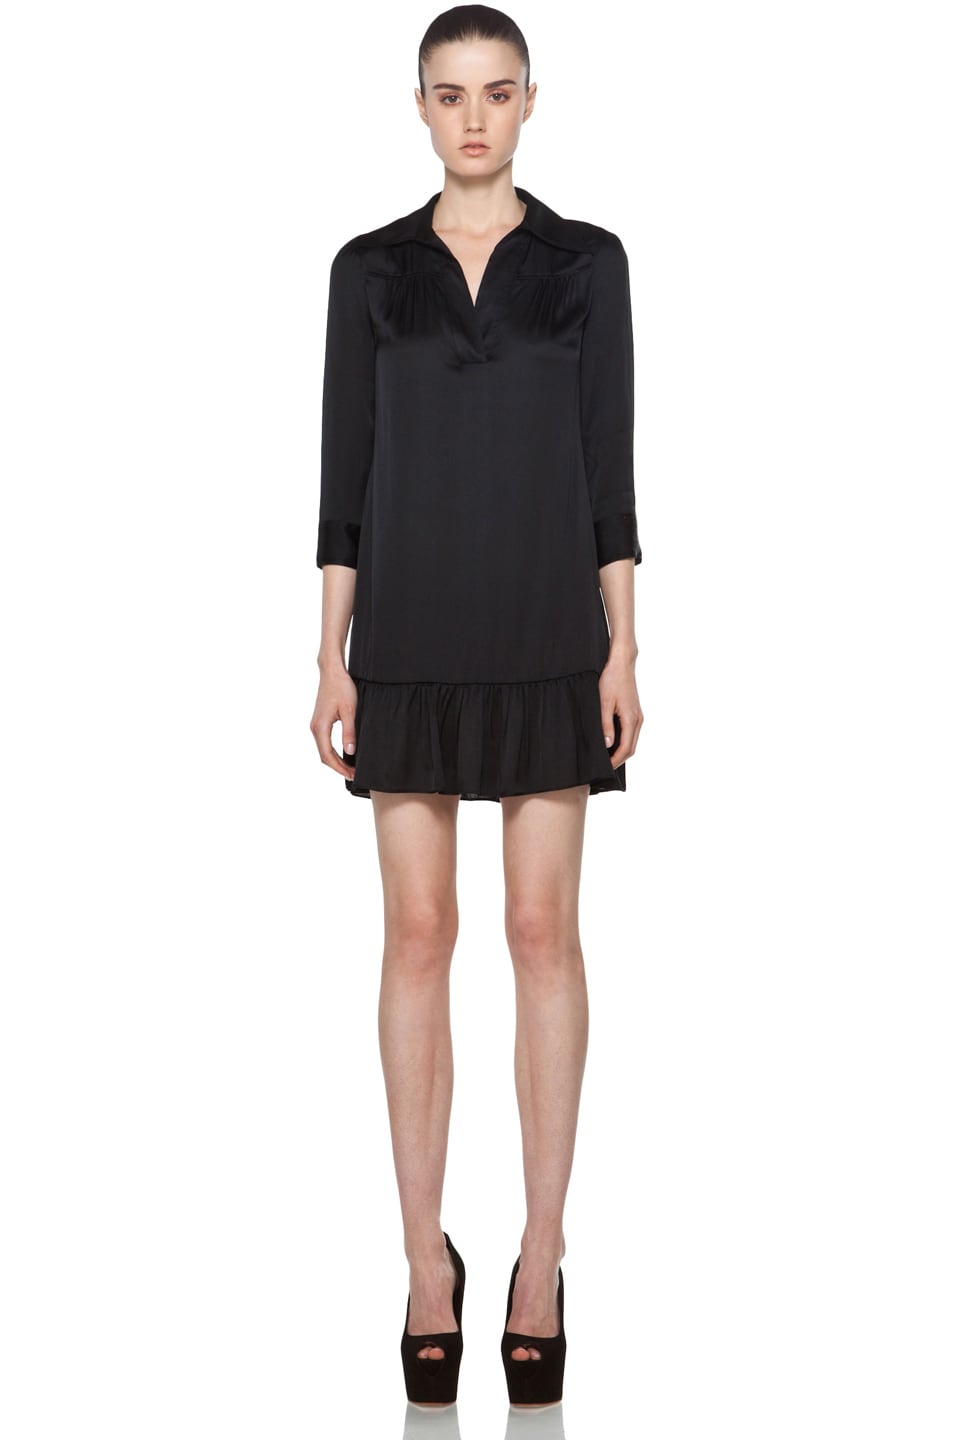 Rachel Zoe Sally Shirt Dress in Black | FWRD